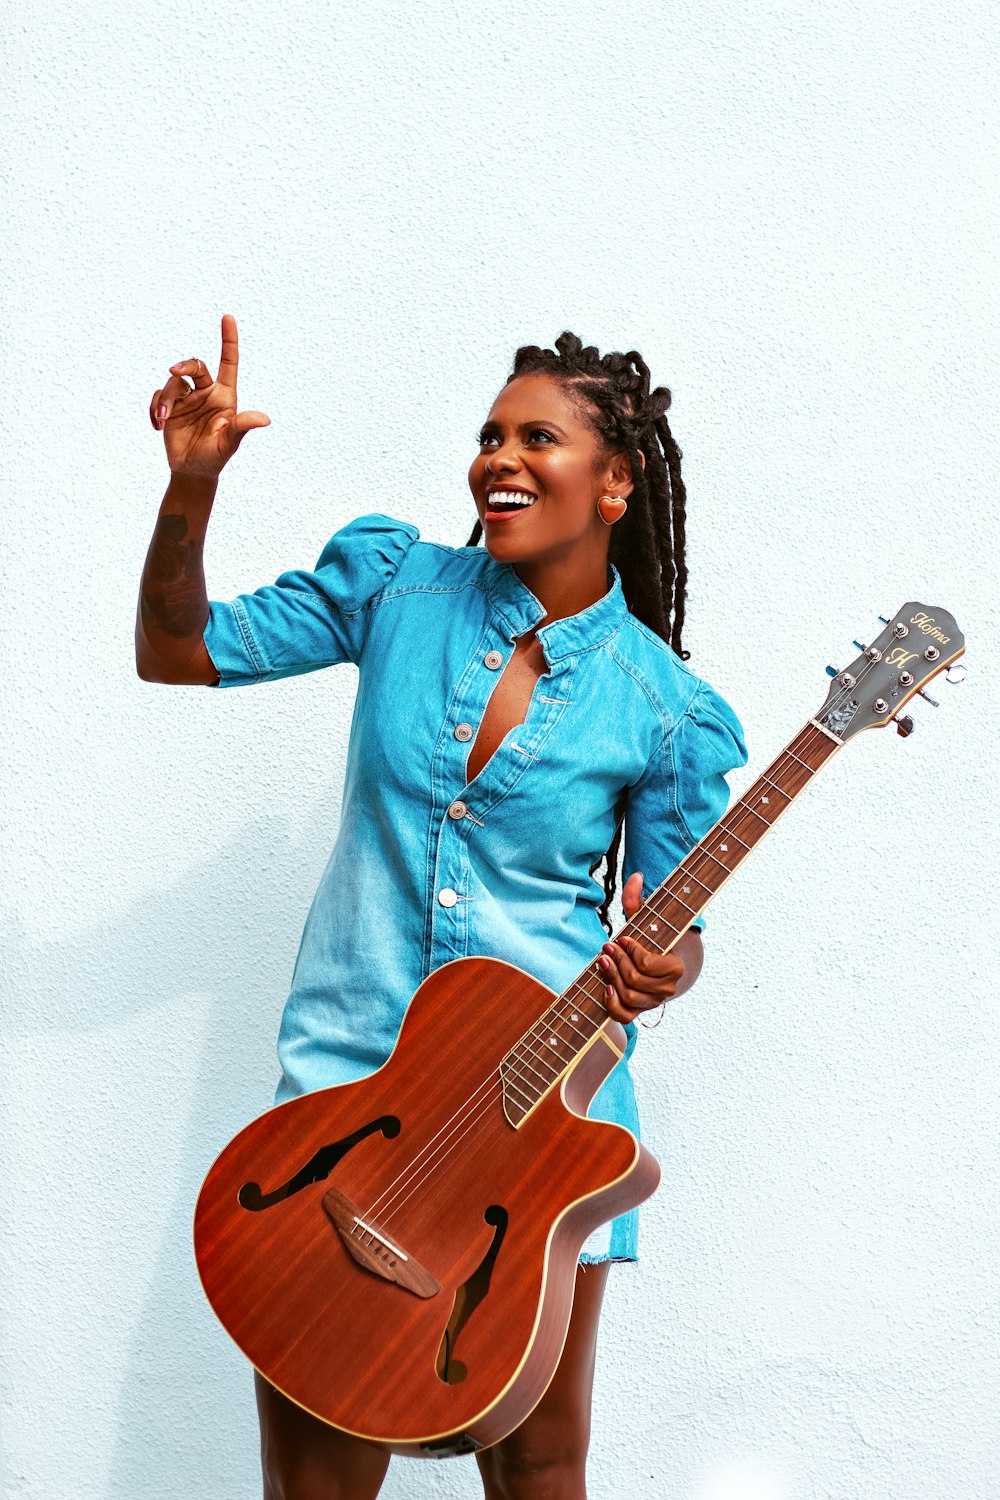 a woman in a blue shirt holding a guitar